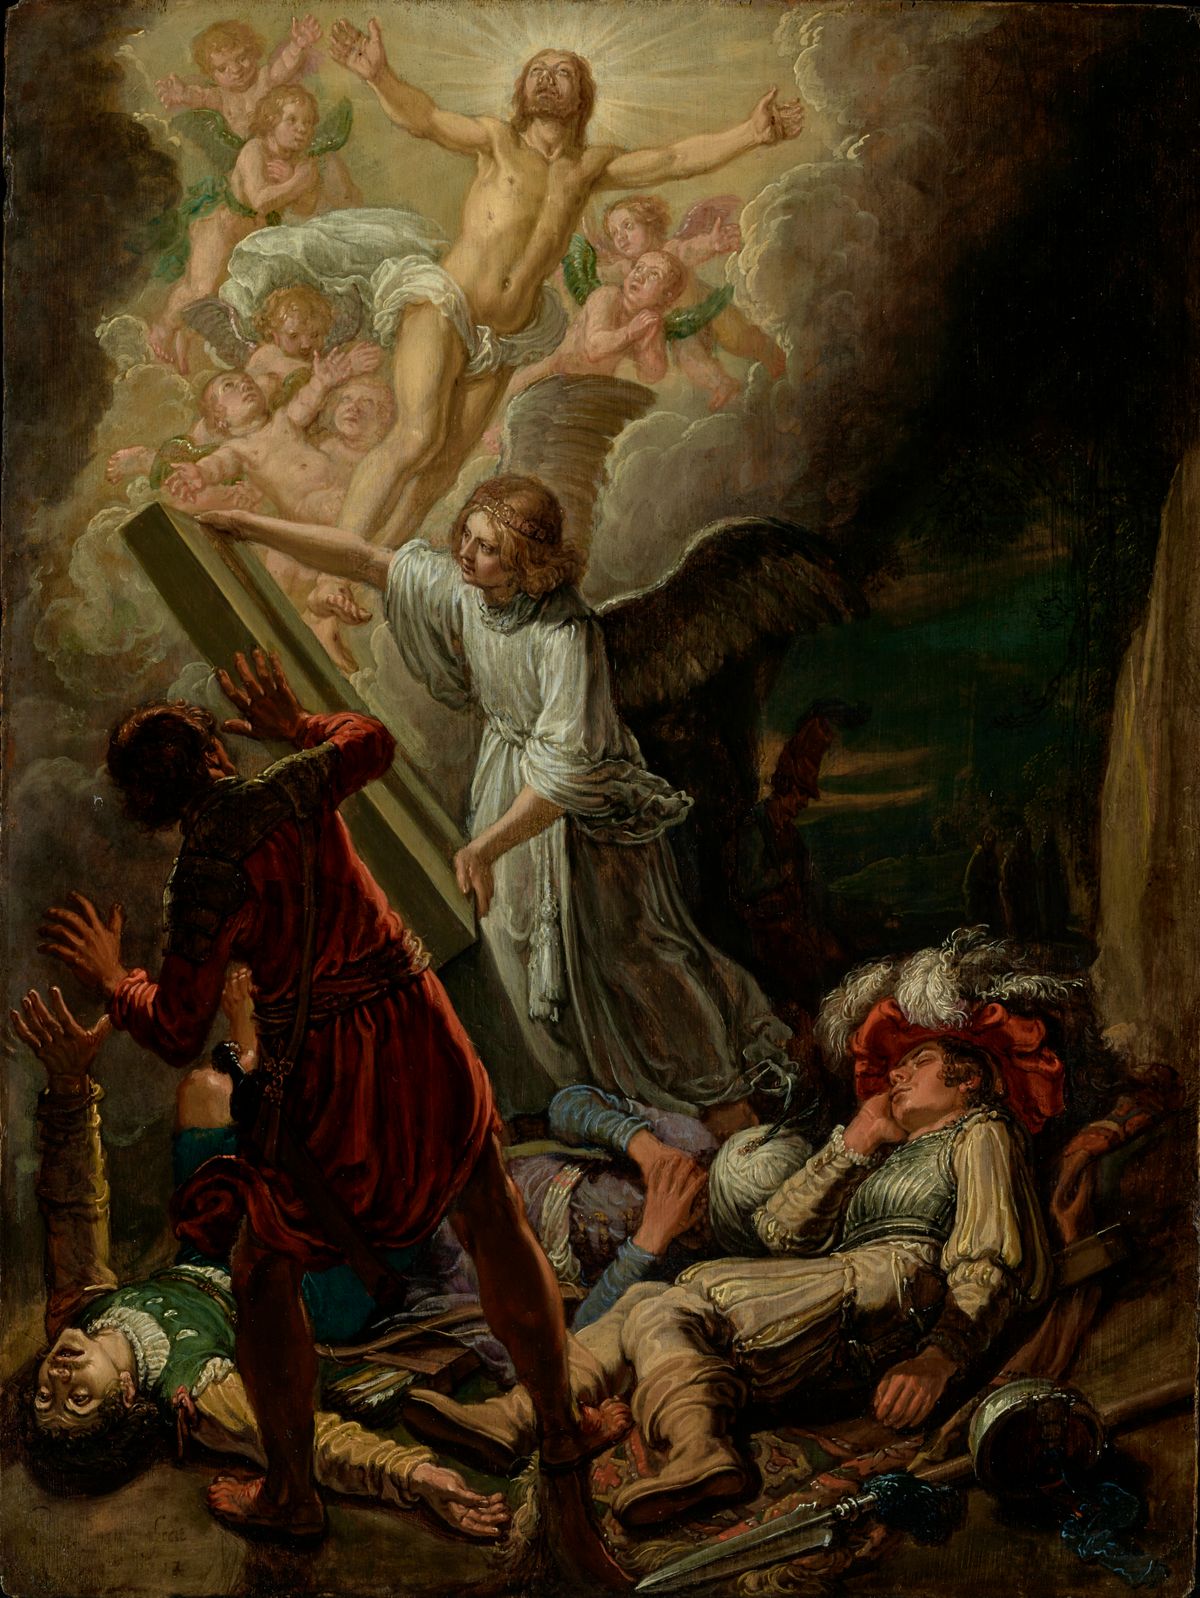 The Resurrection by Pieter Lastman (1612) - Public Domain Bible Painting